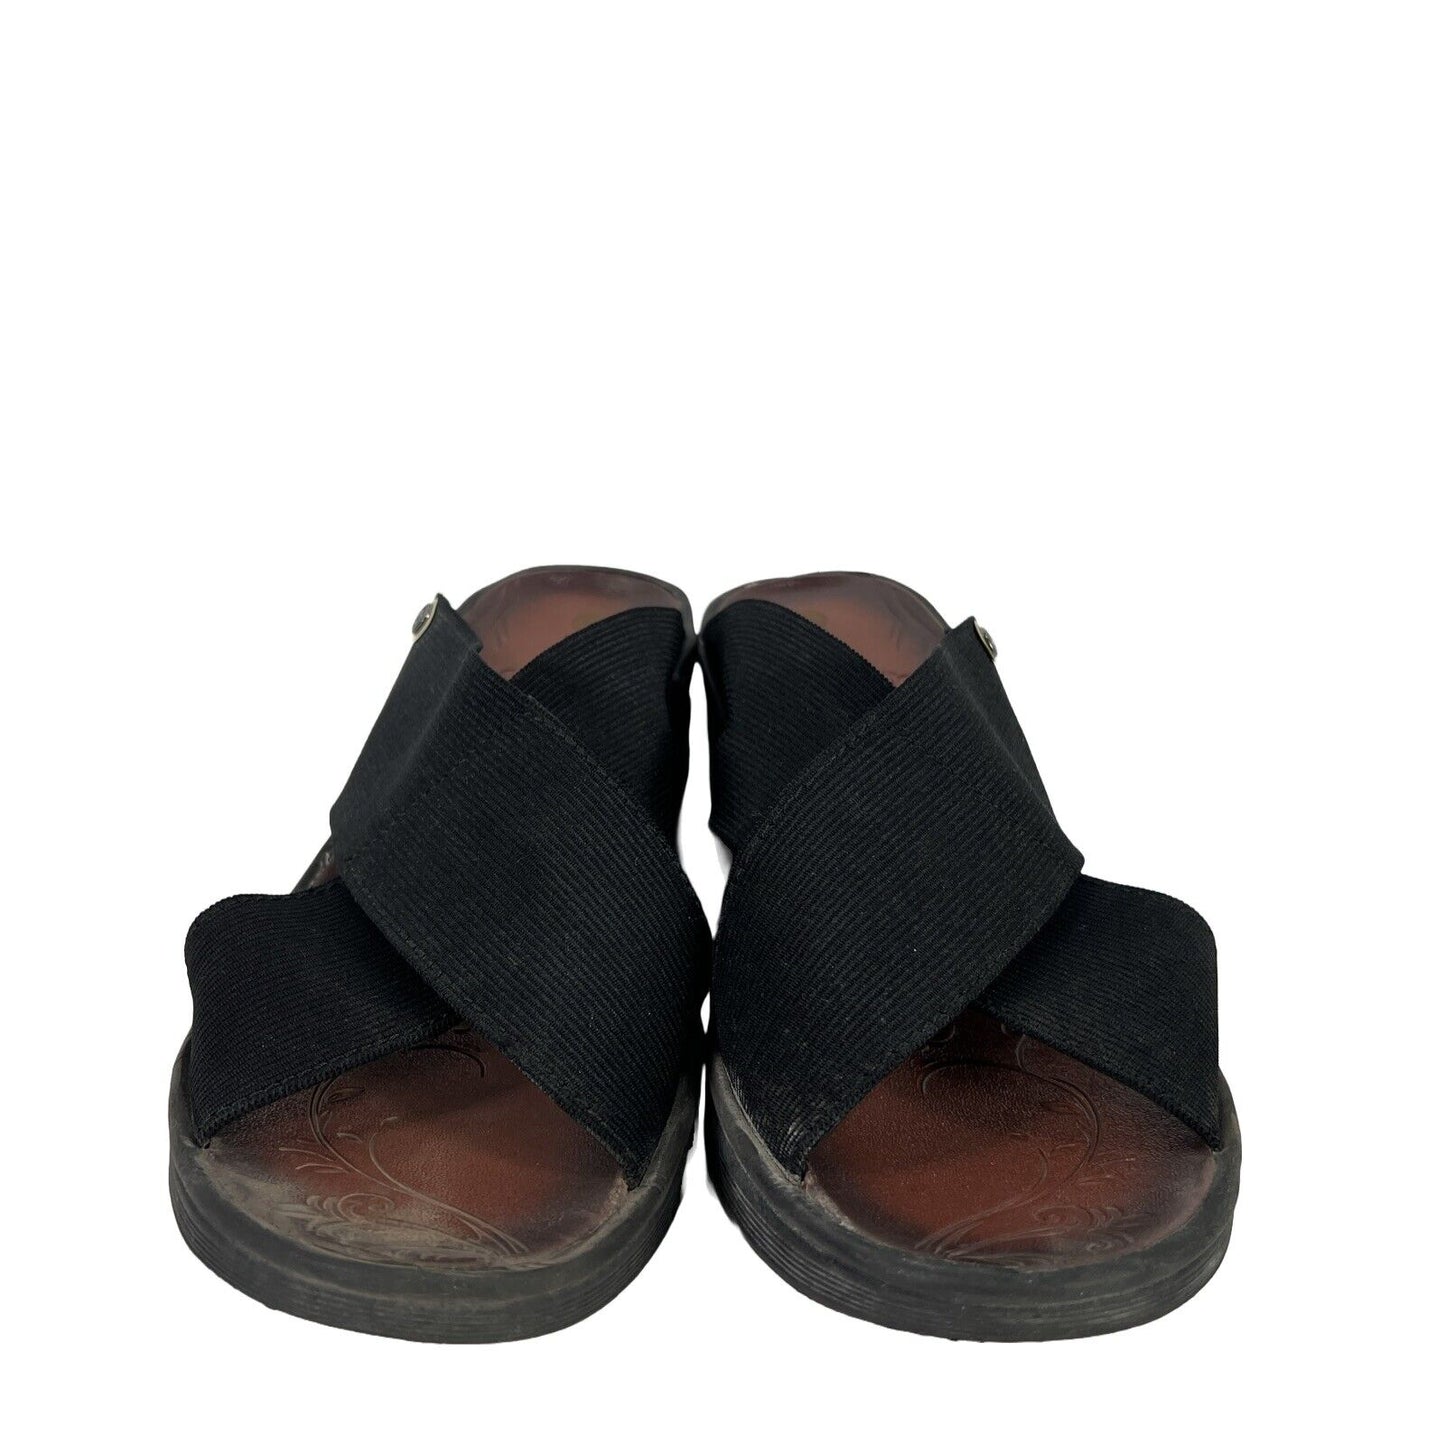 Bzees Women's Black Desire Wedge Slide Sandals - 10